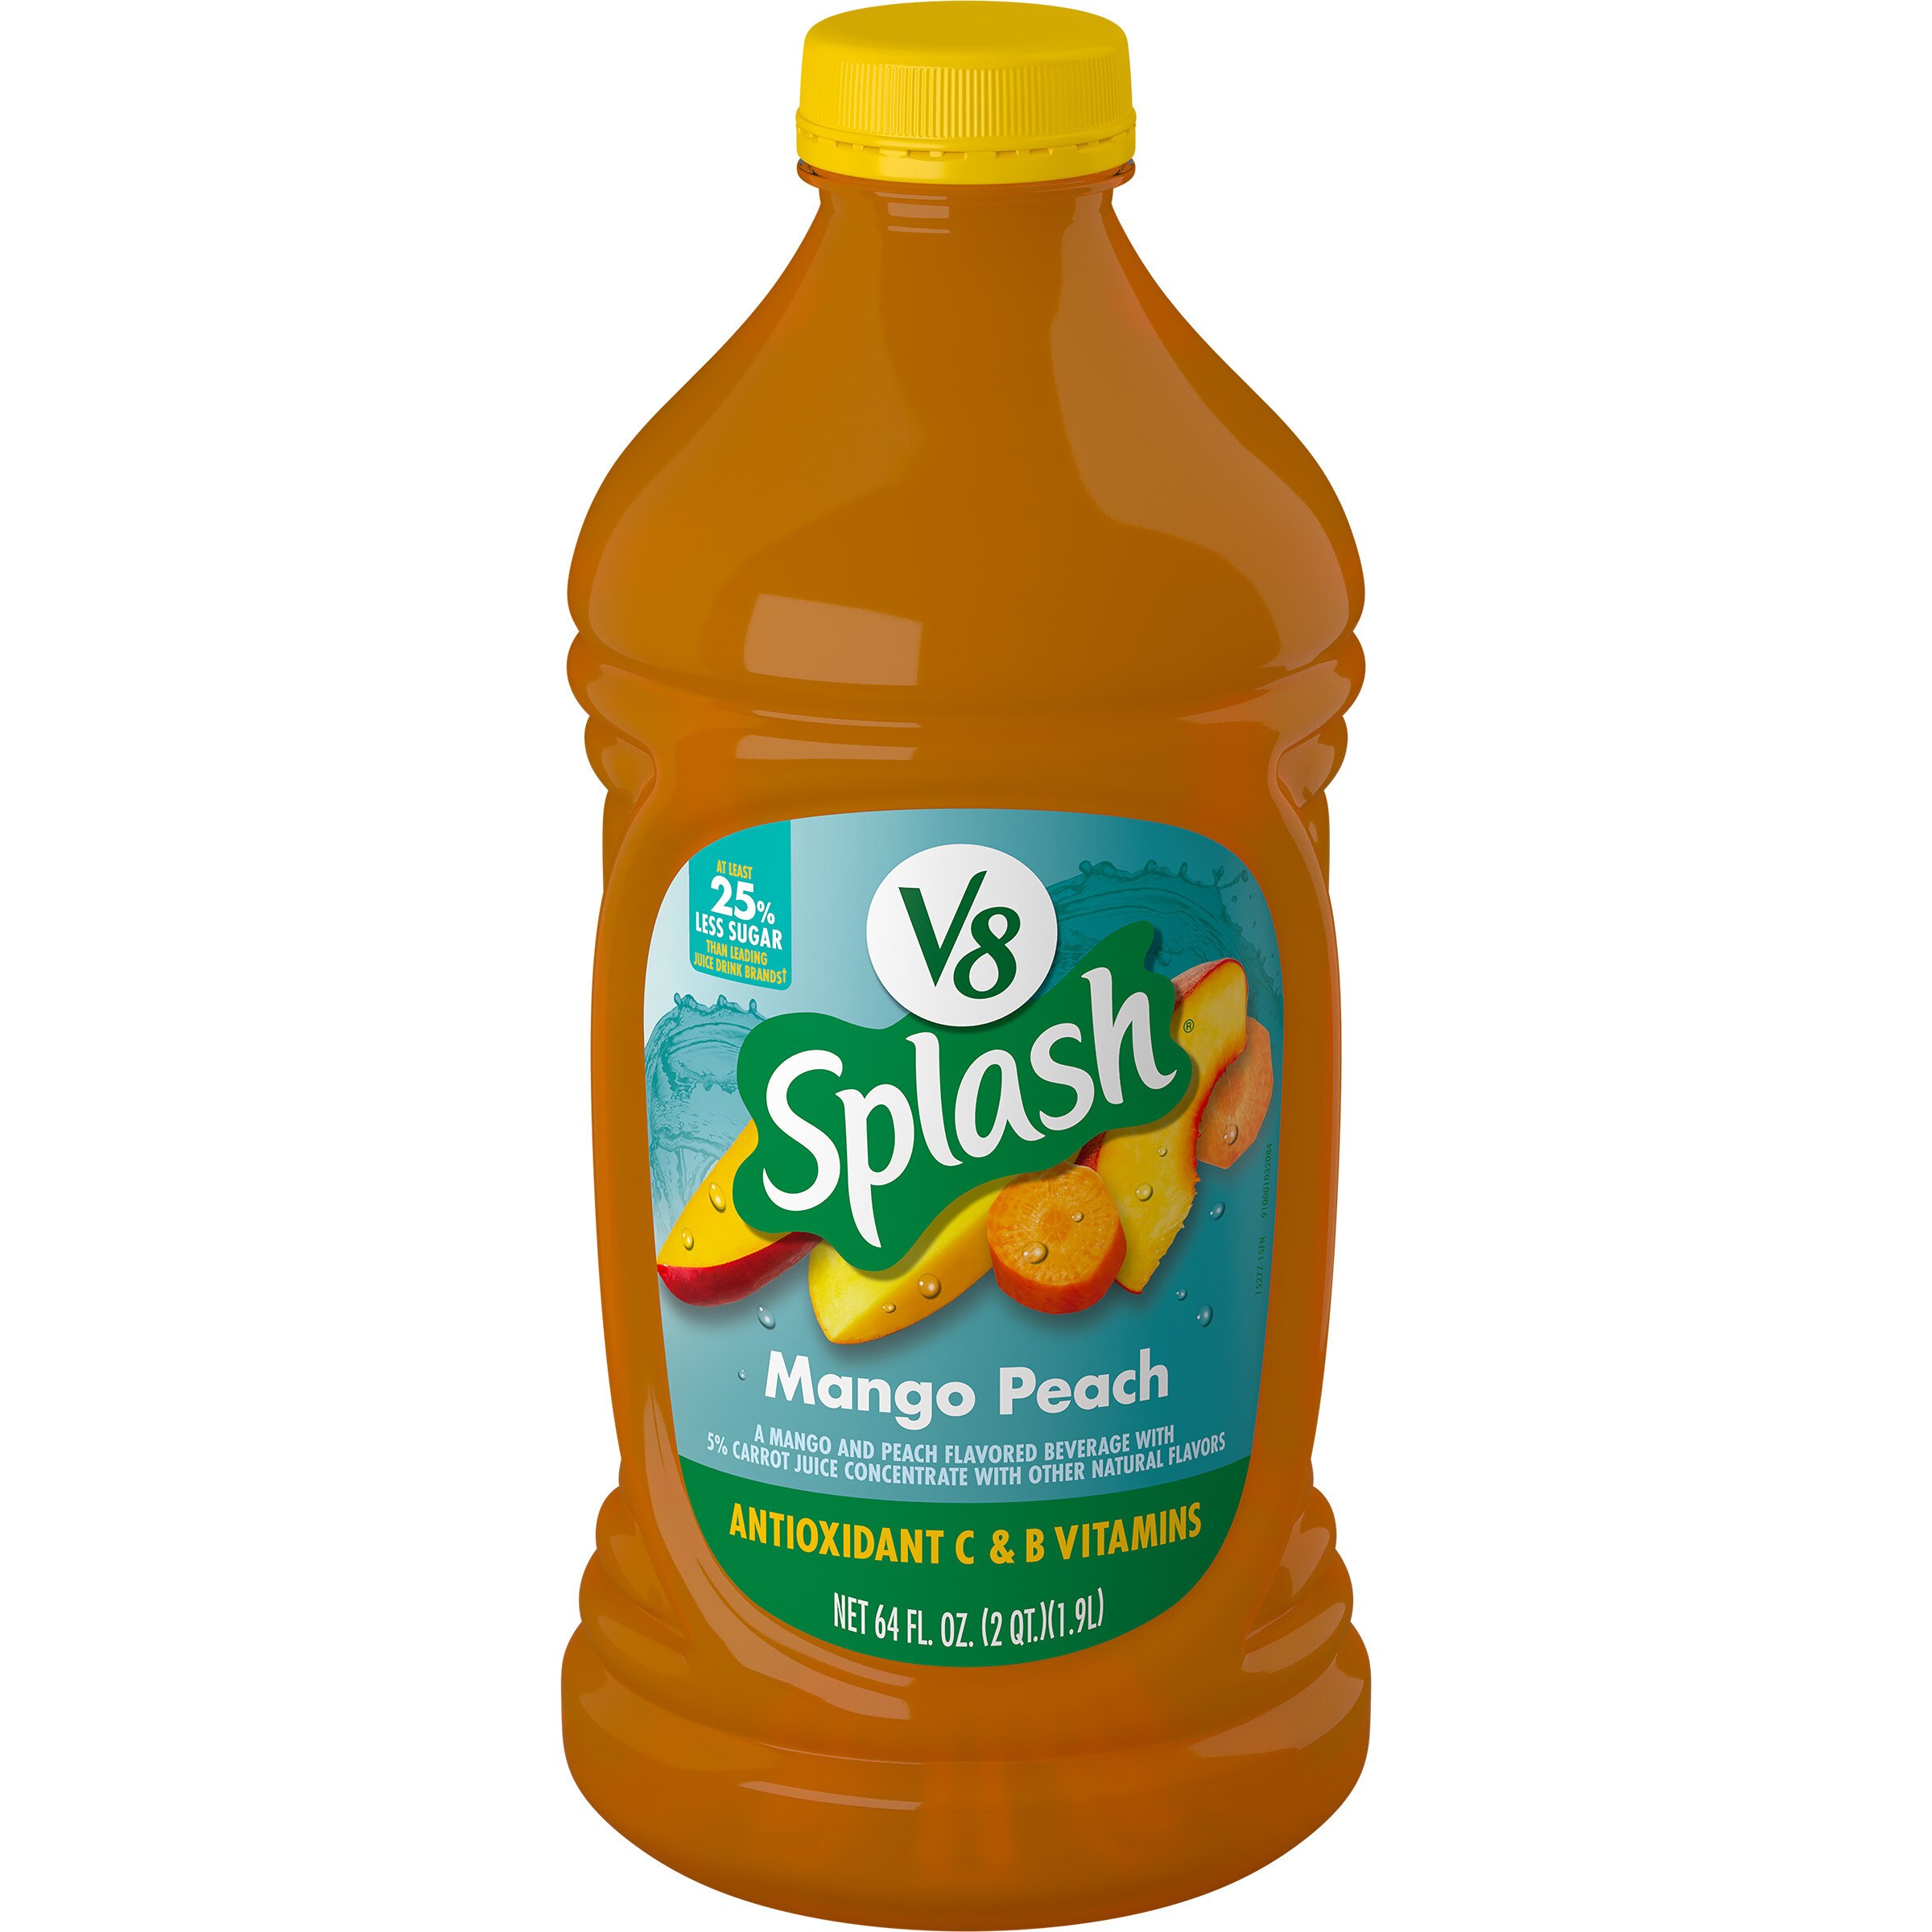 V8 Splash Mango Peach Flavored Juice Beverage, 64 FL OZ Bottle